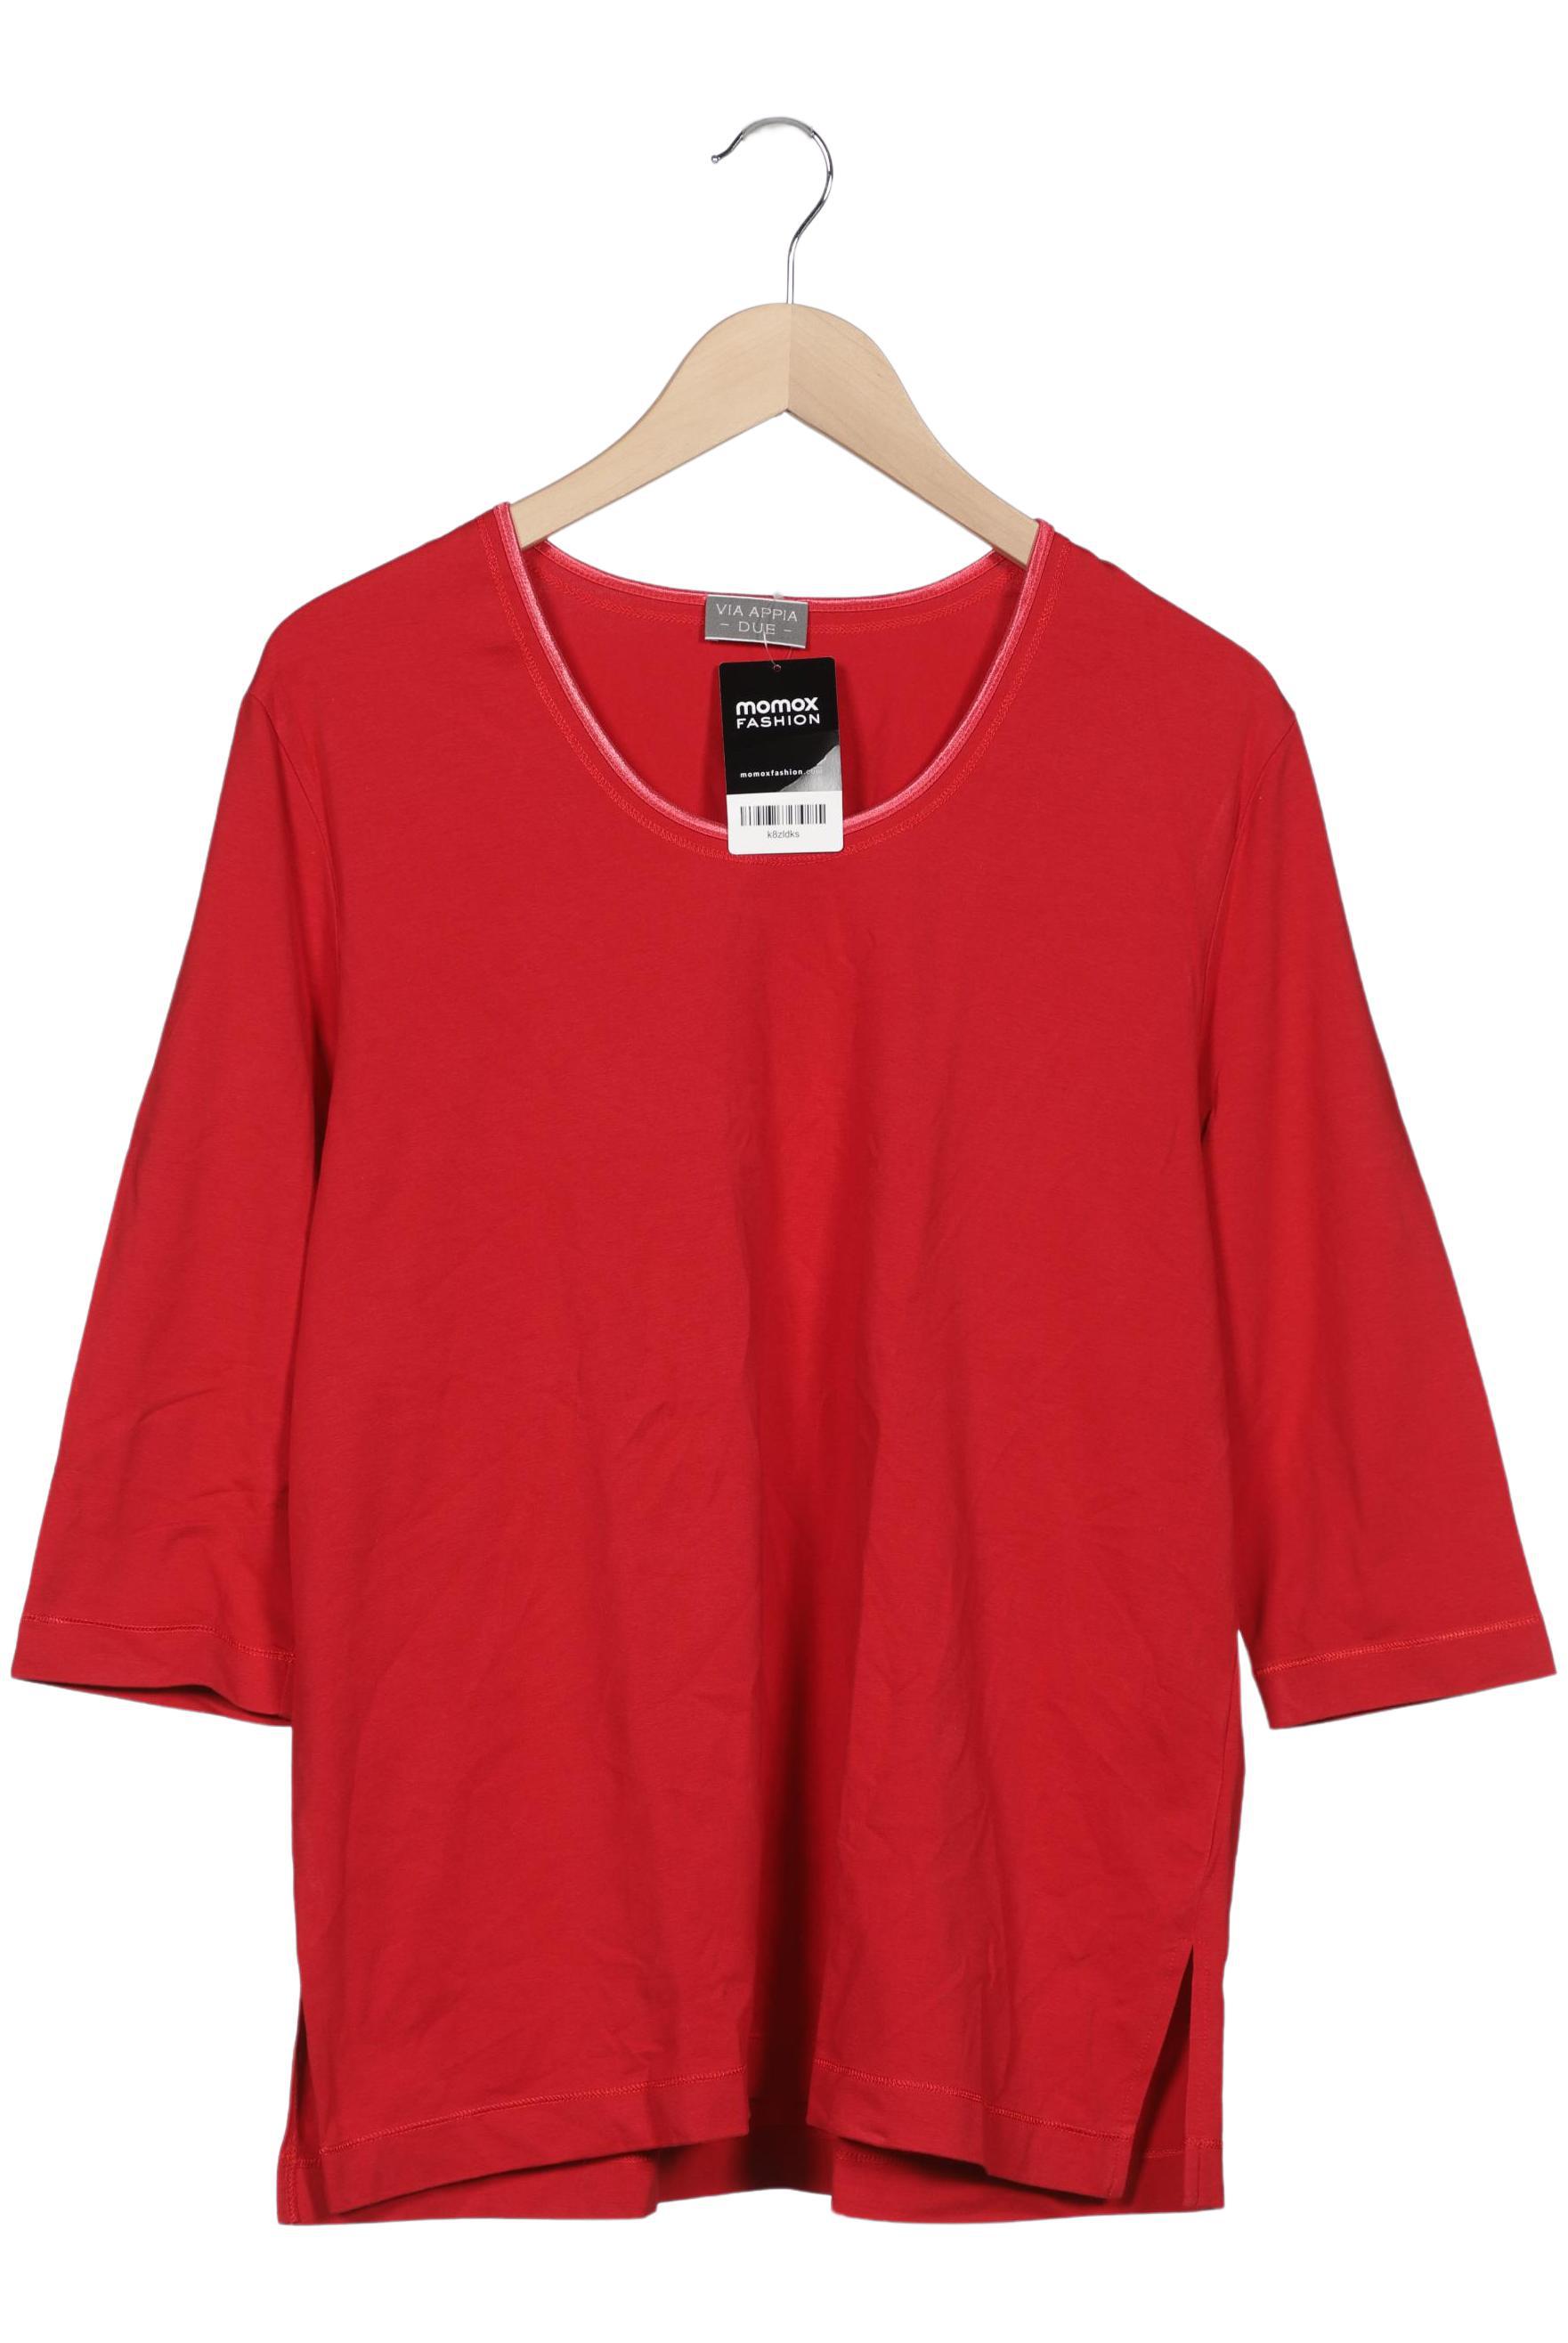 VIA Appia DUE Damen T-Shirt, rot, Gr. 44 von VIA APPIA DUE